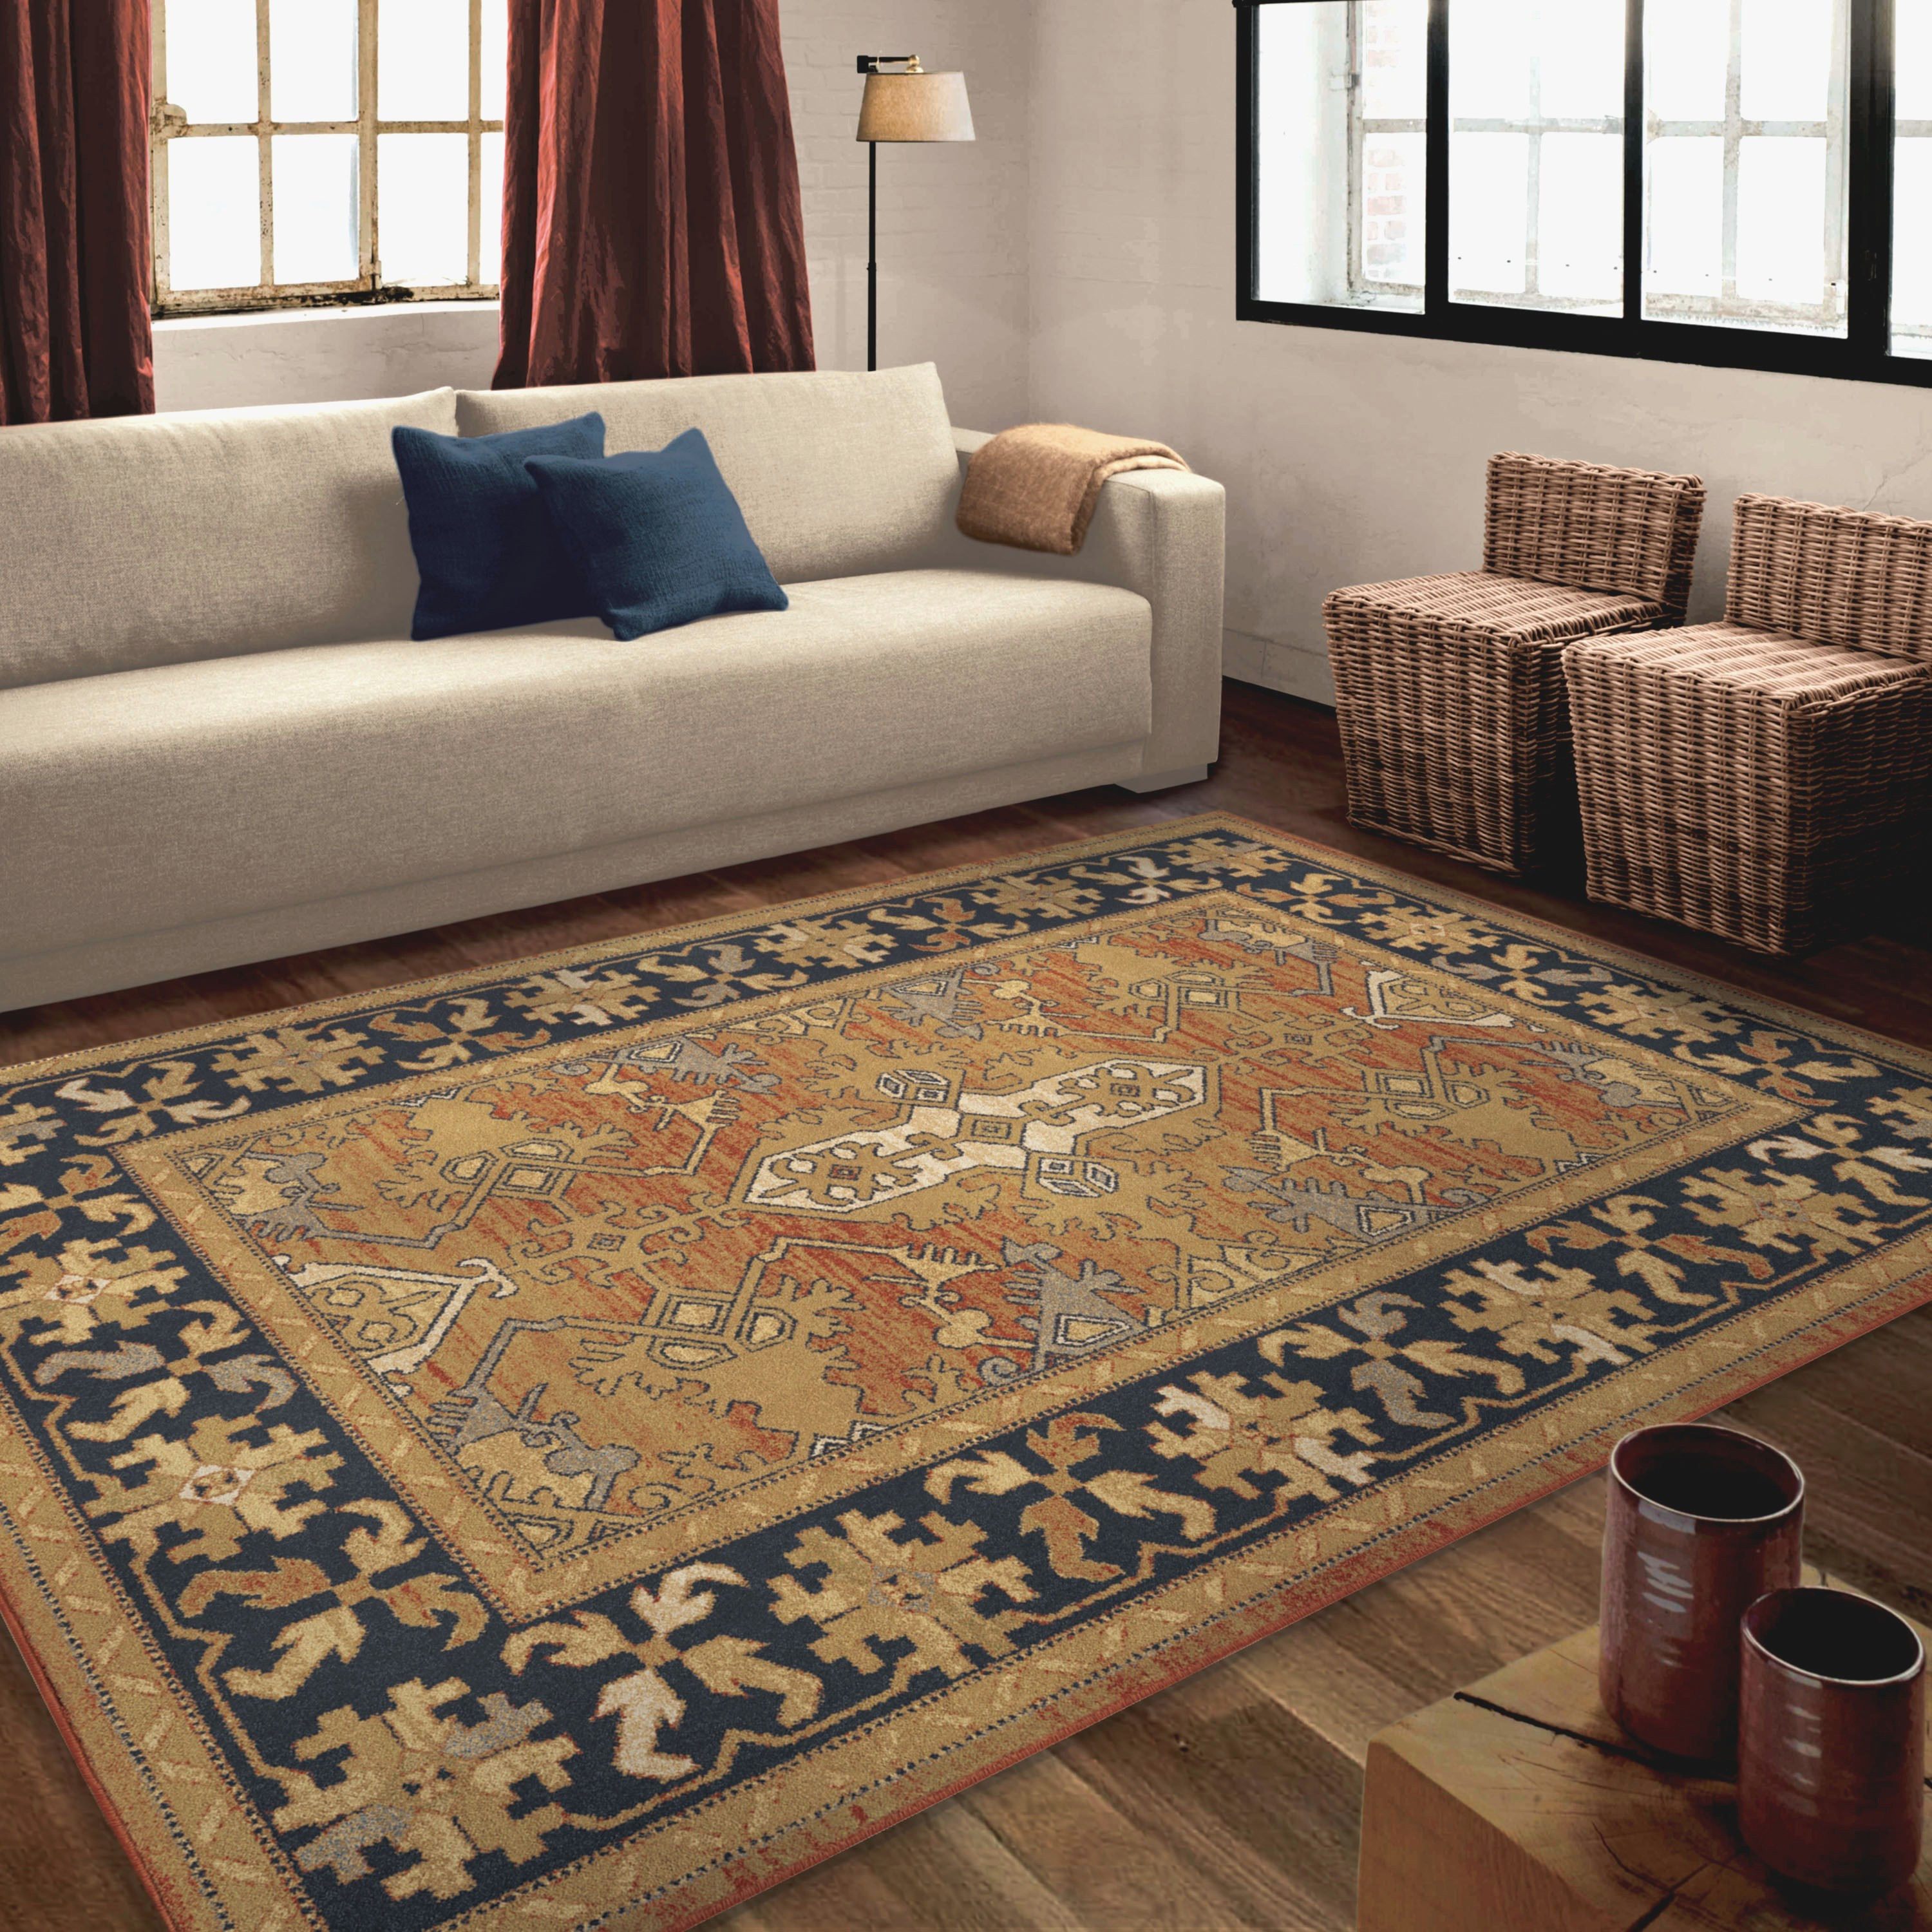 13 Fashionable Carpet Or Hardwood Floors In Living Room Unique Flooring Ideas